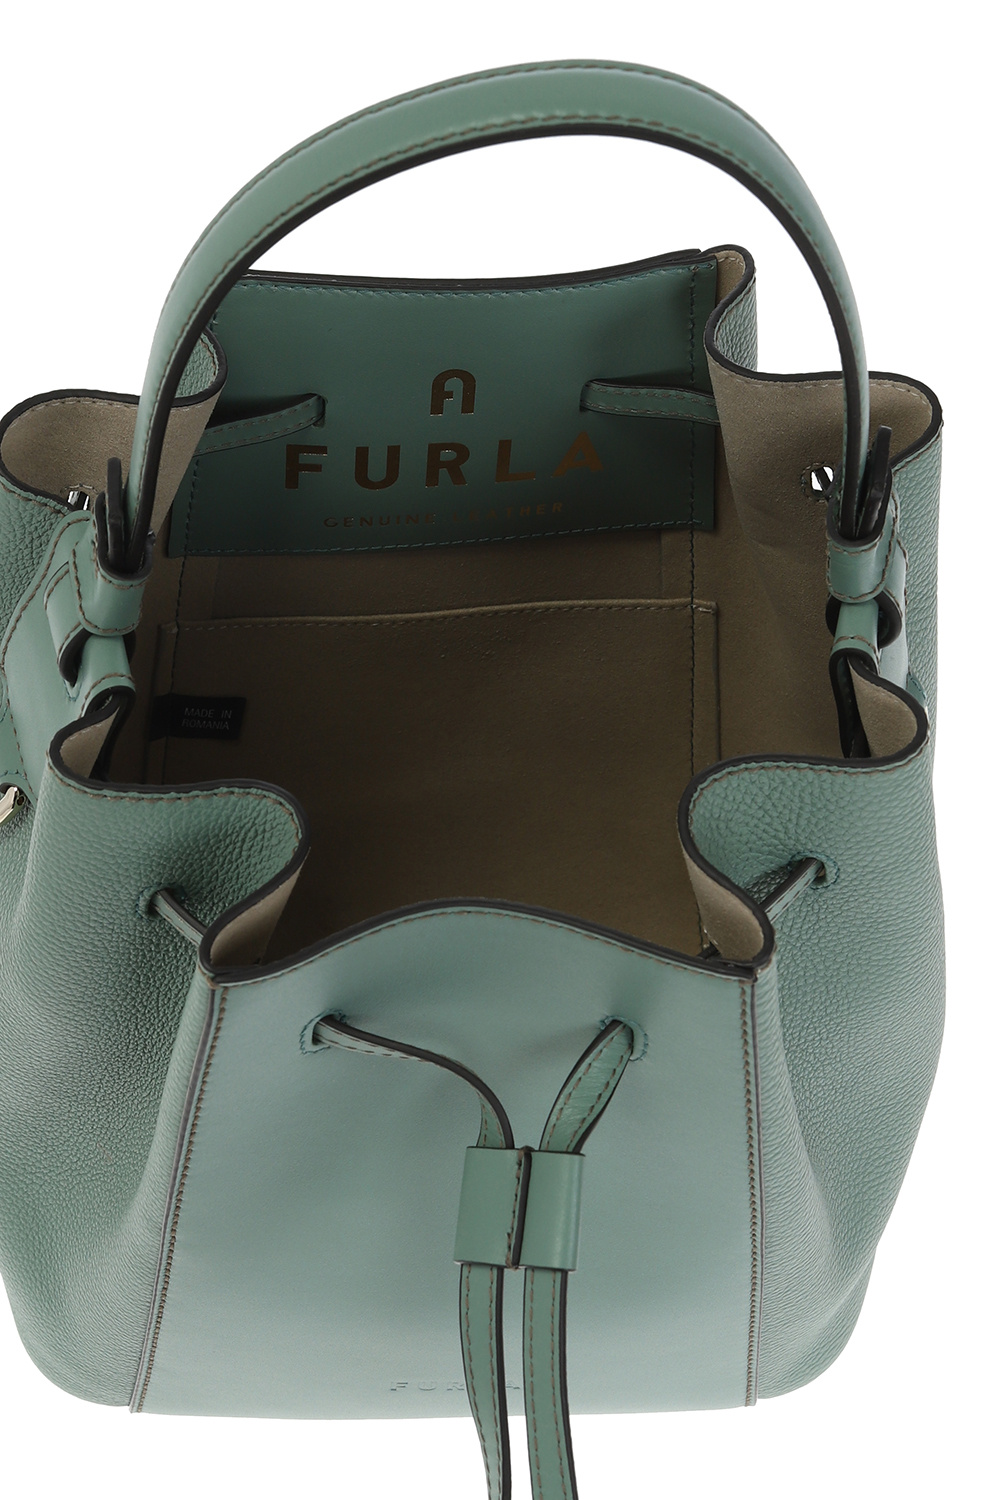 Furla - Spotted: Kiwi 李函 and the Furla Miastella Bucket Bag